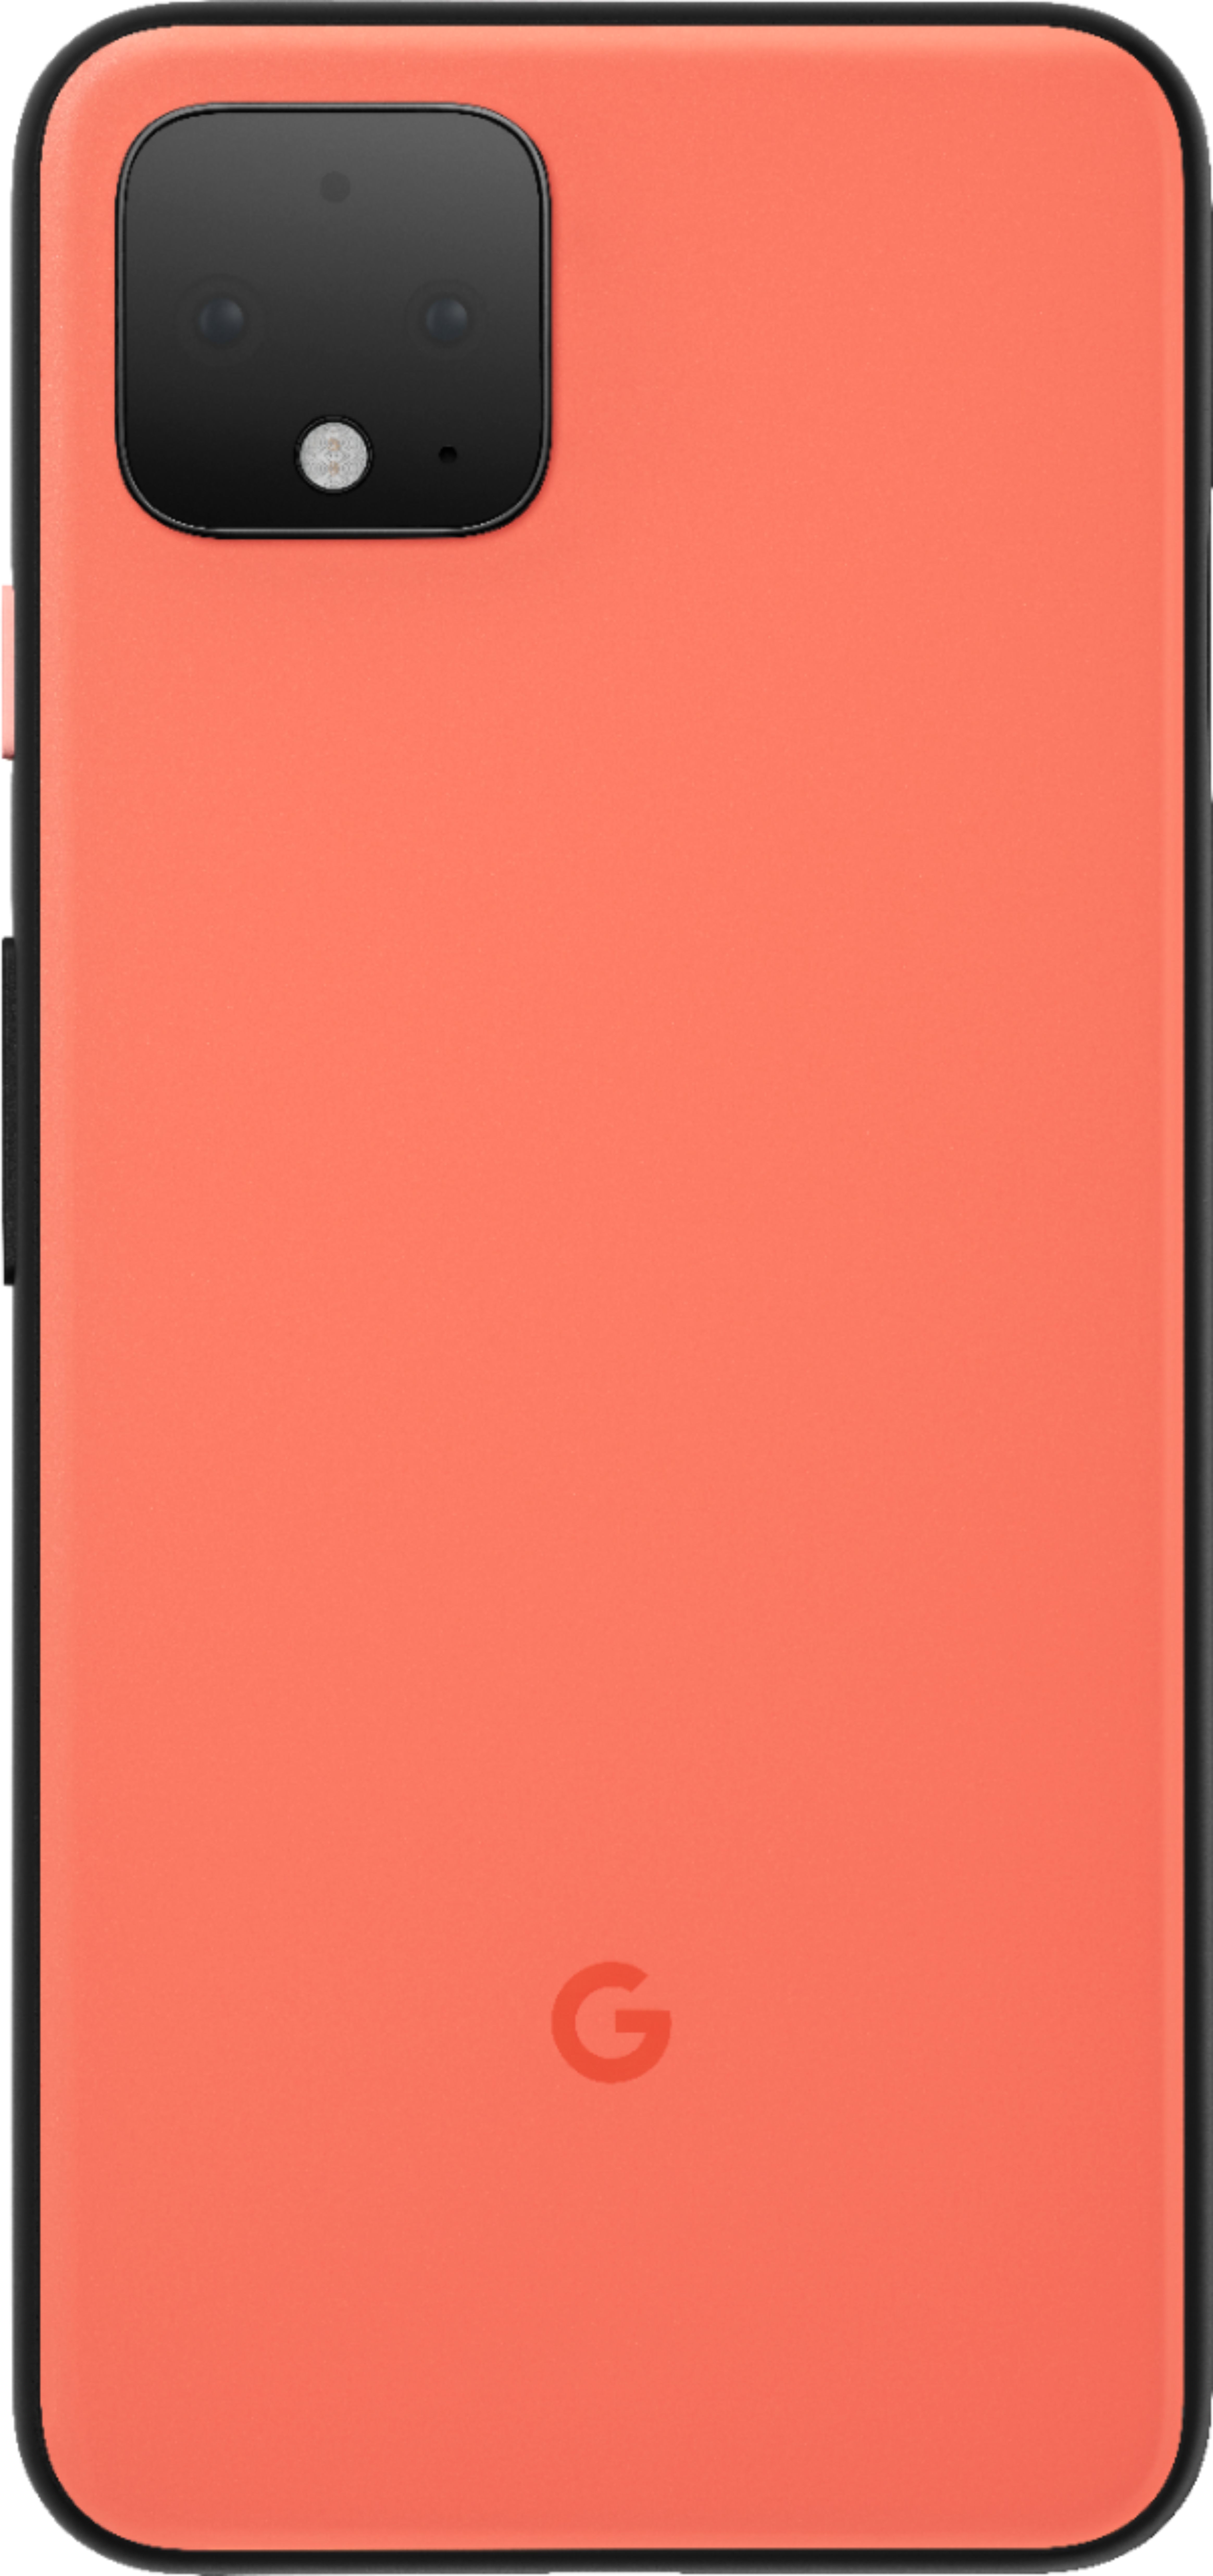 Google Pixel 4 G020I Oh So Orange for sale online Unlocked Single SIM 64GB 